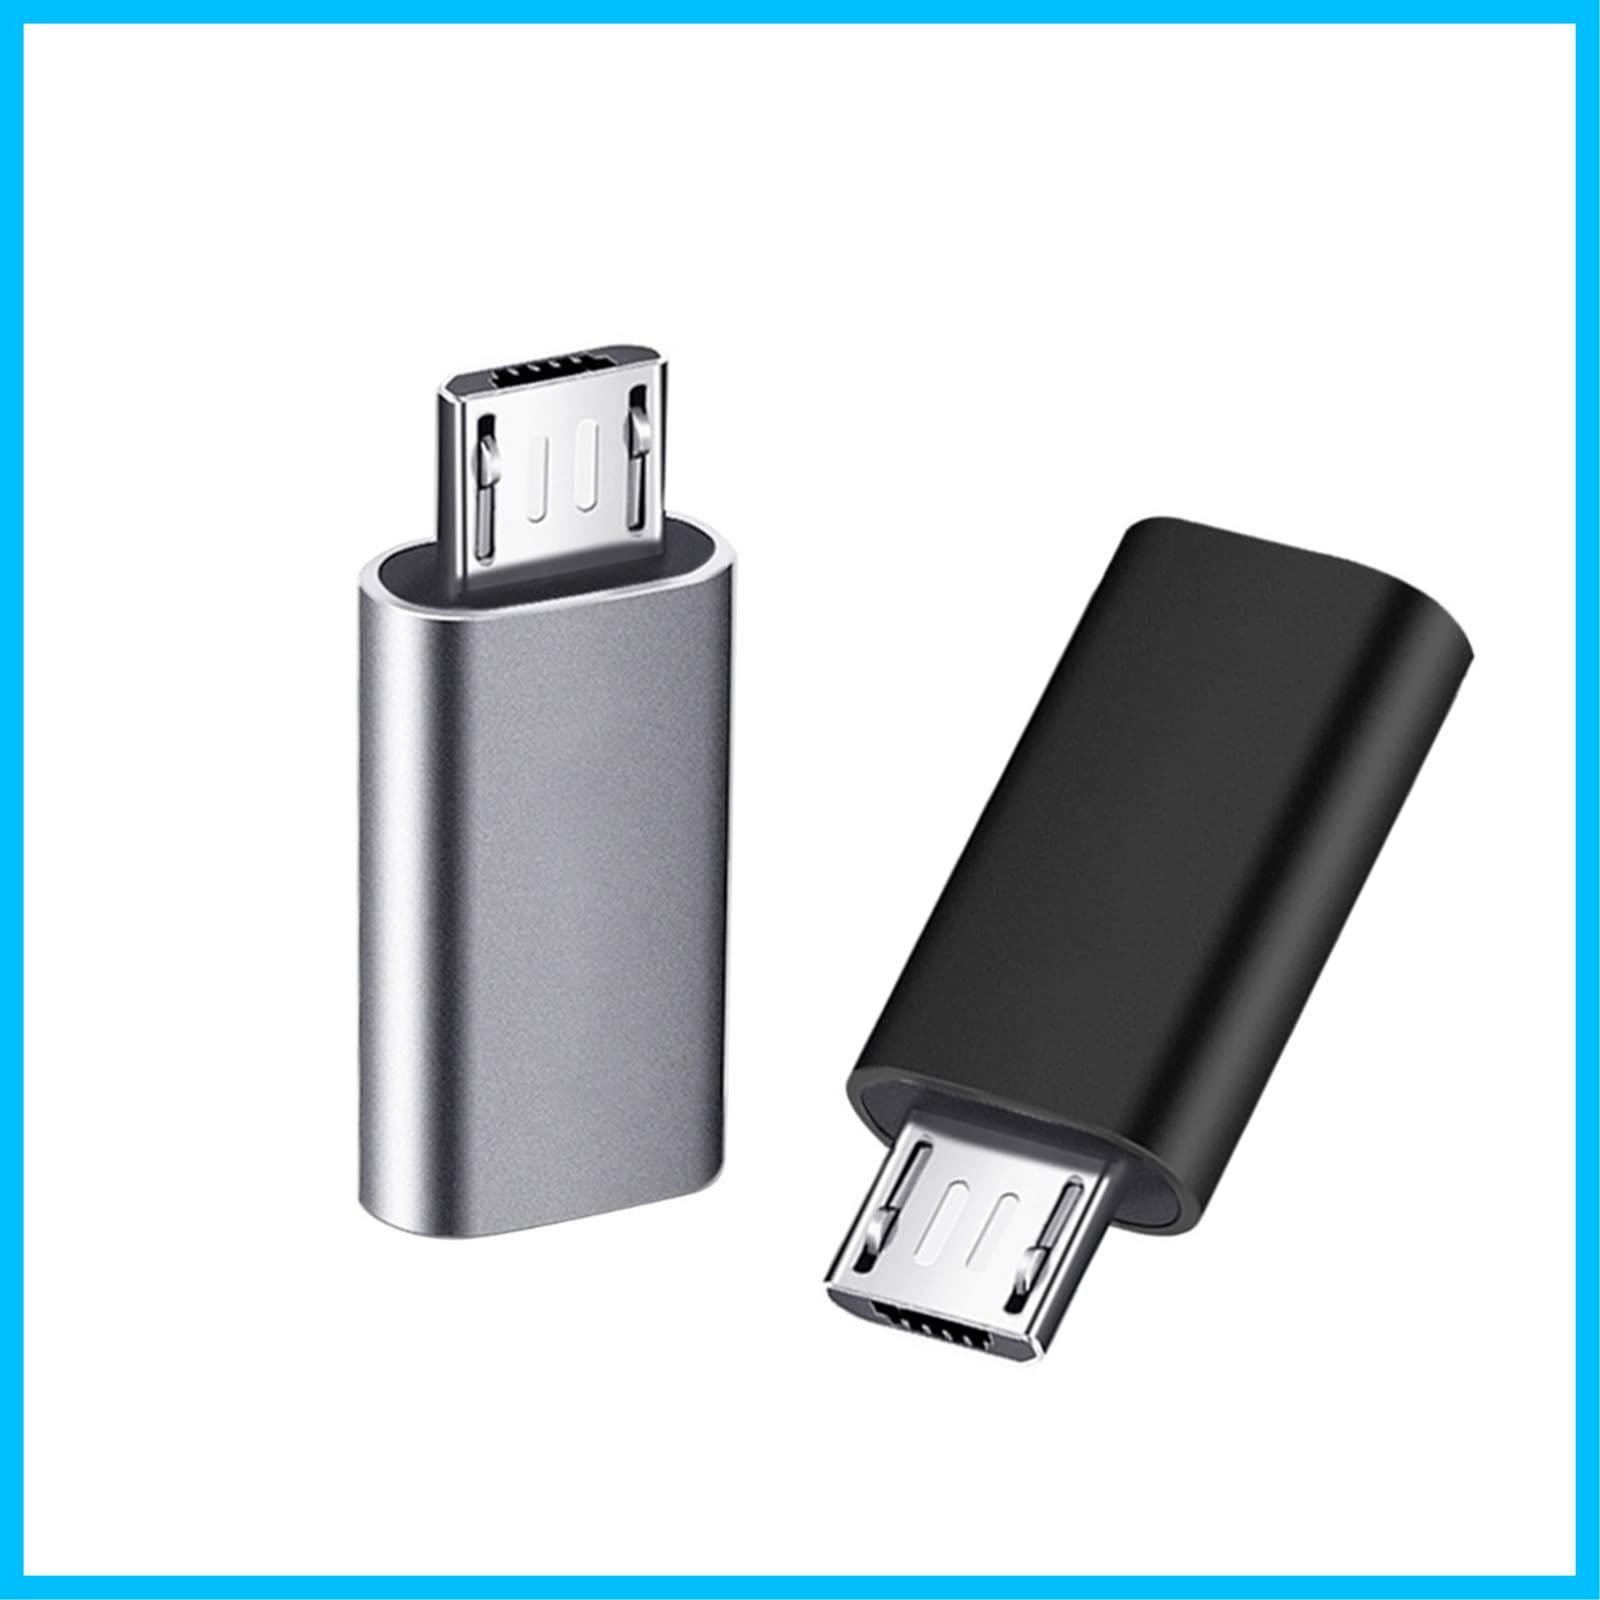 USB TYPE C 変換 アダプター ブラック タイプ コネクタ 充電 転送